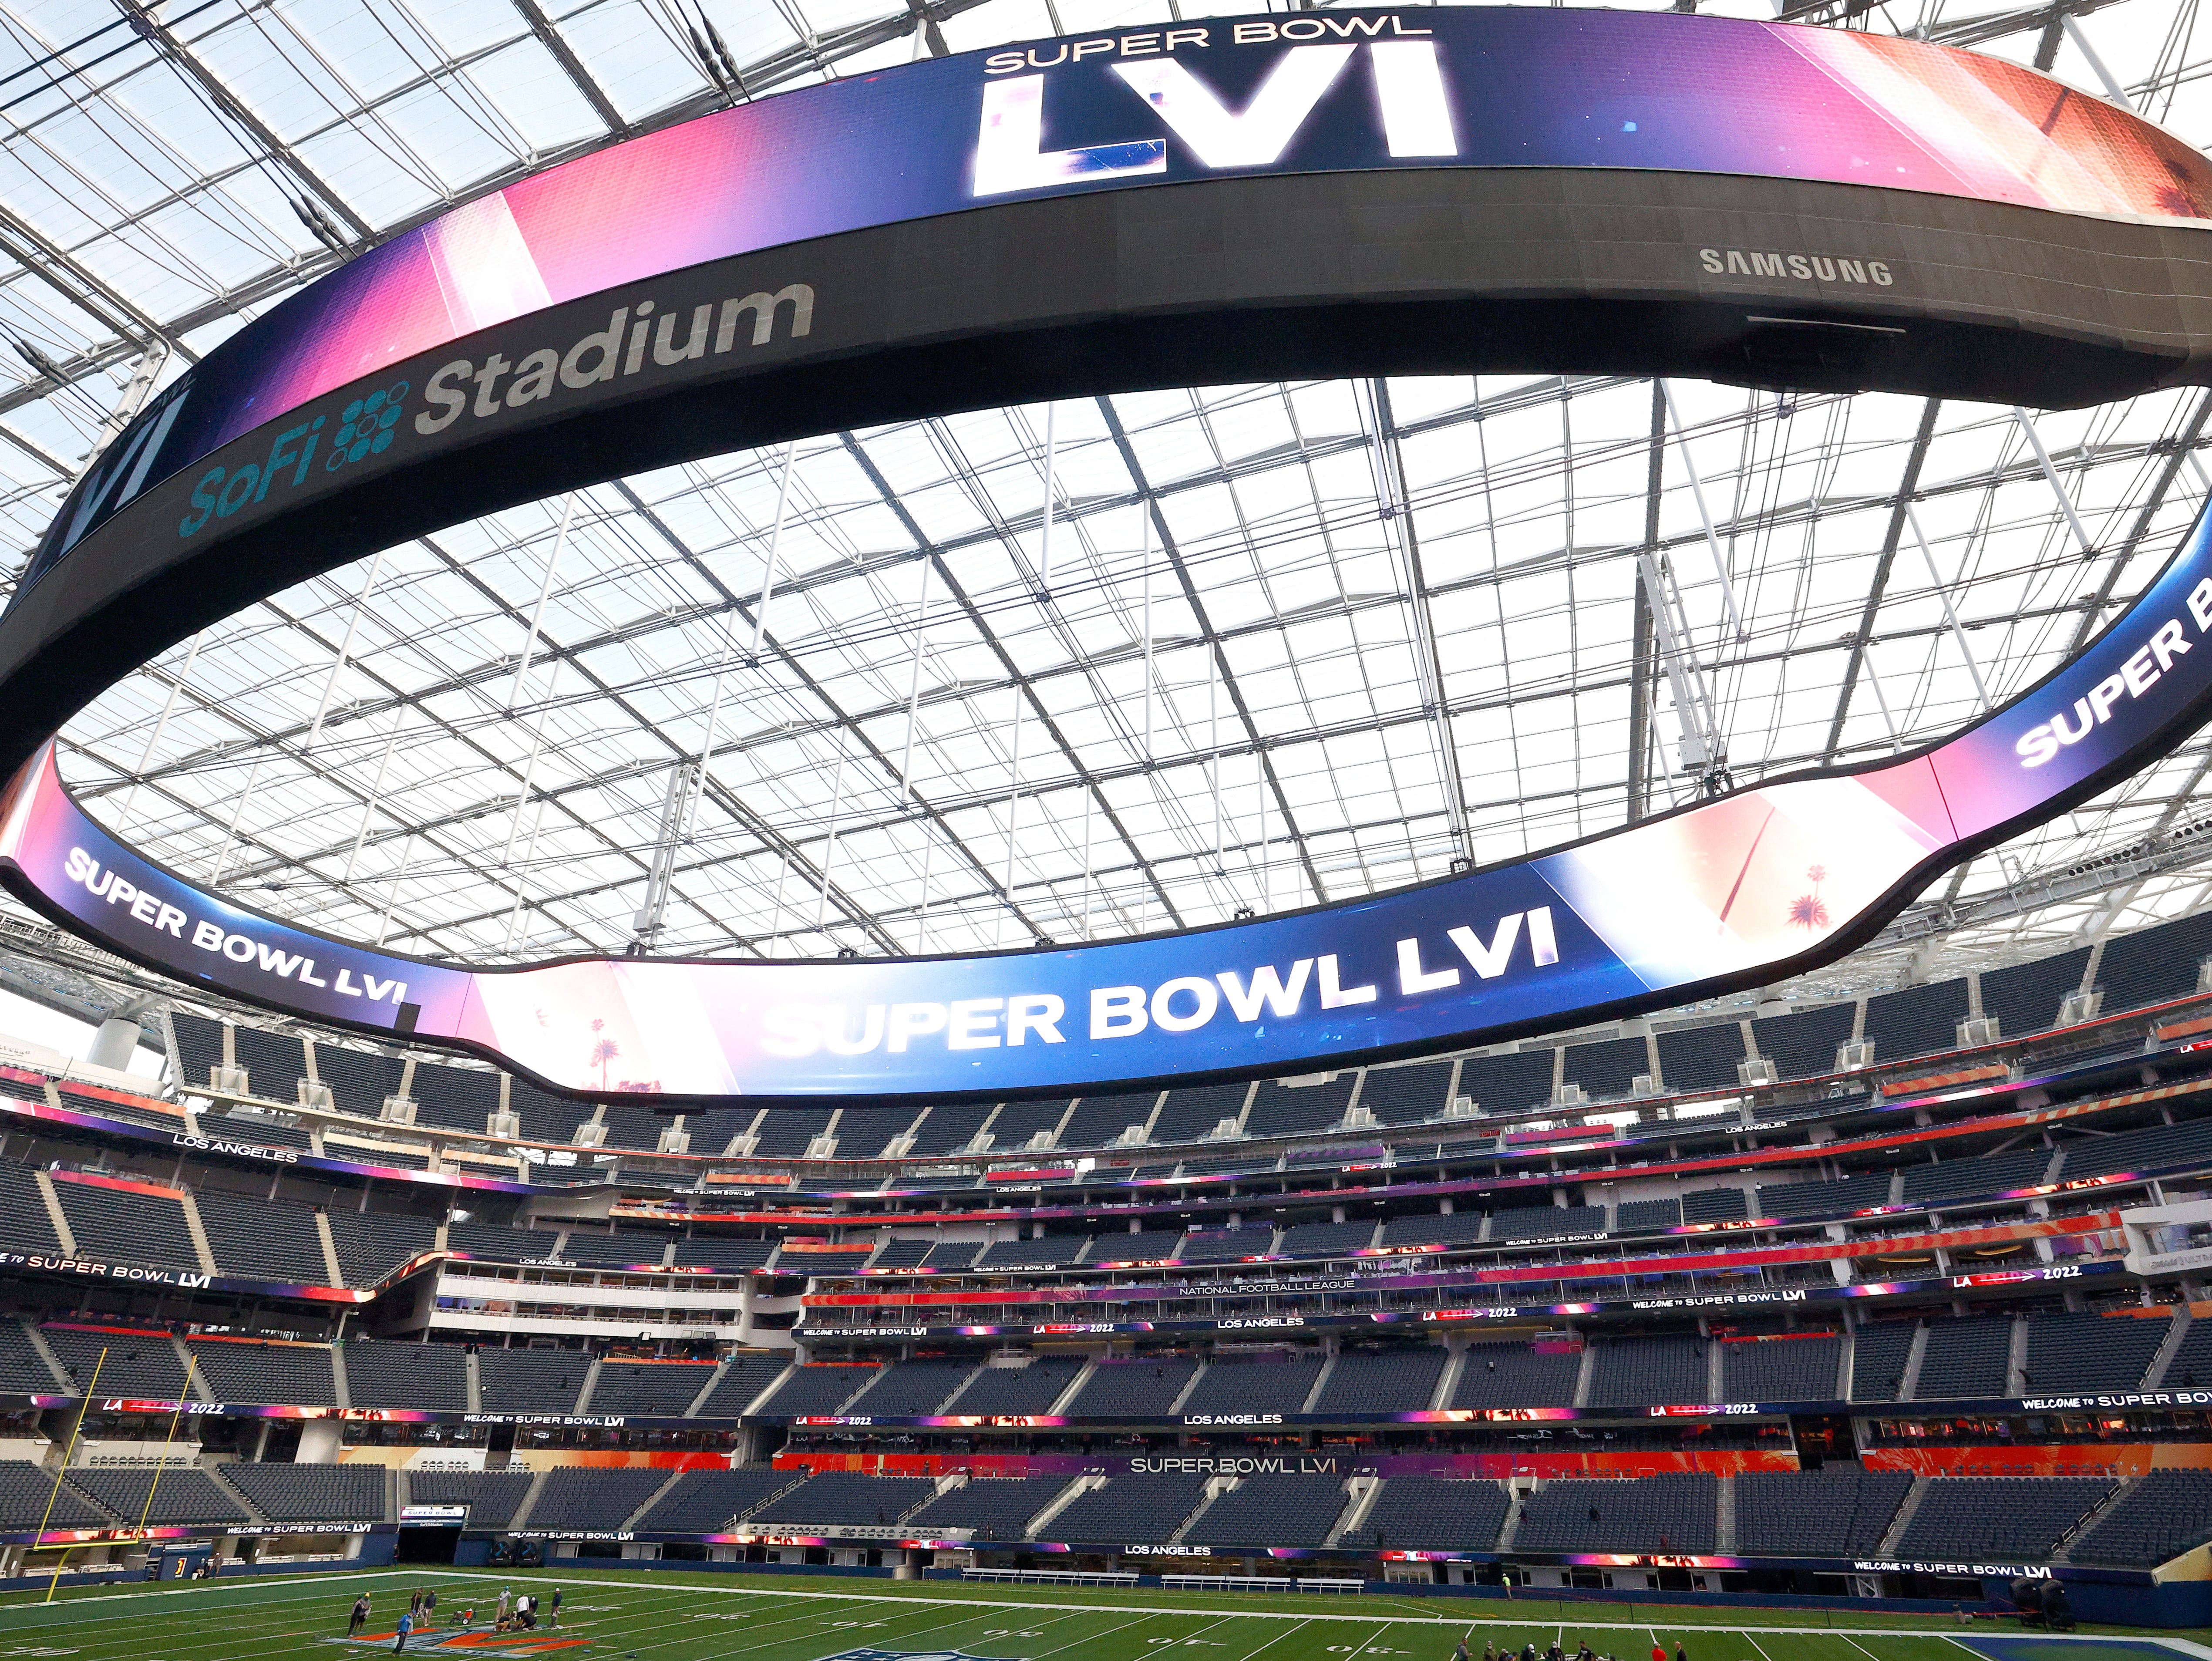 Super Bowl LVI reignites Los Angeles' love affair with NFL